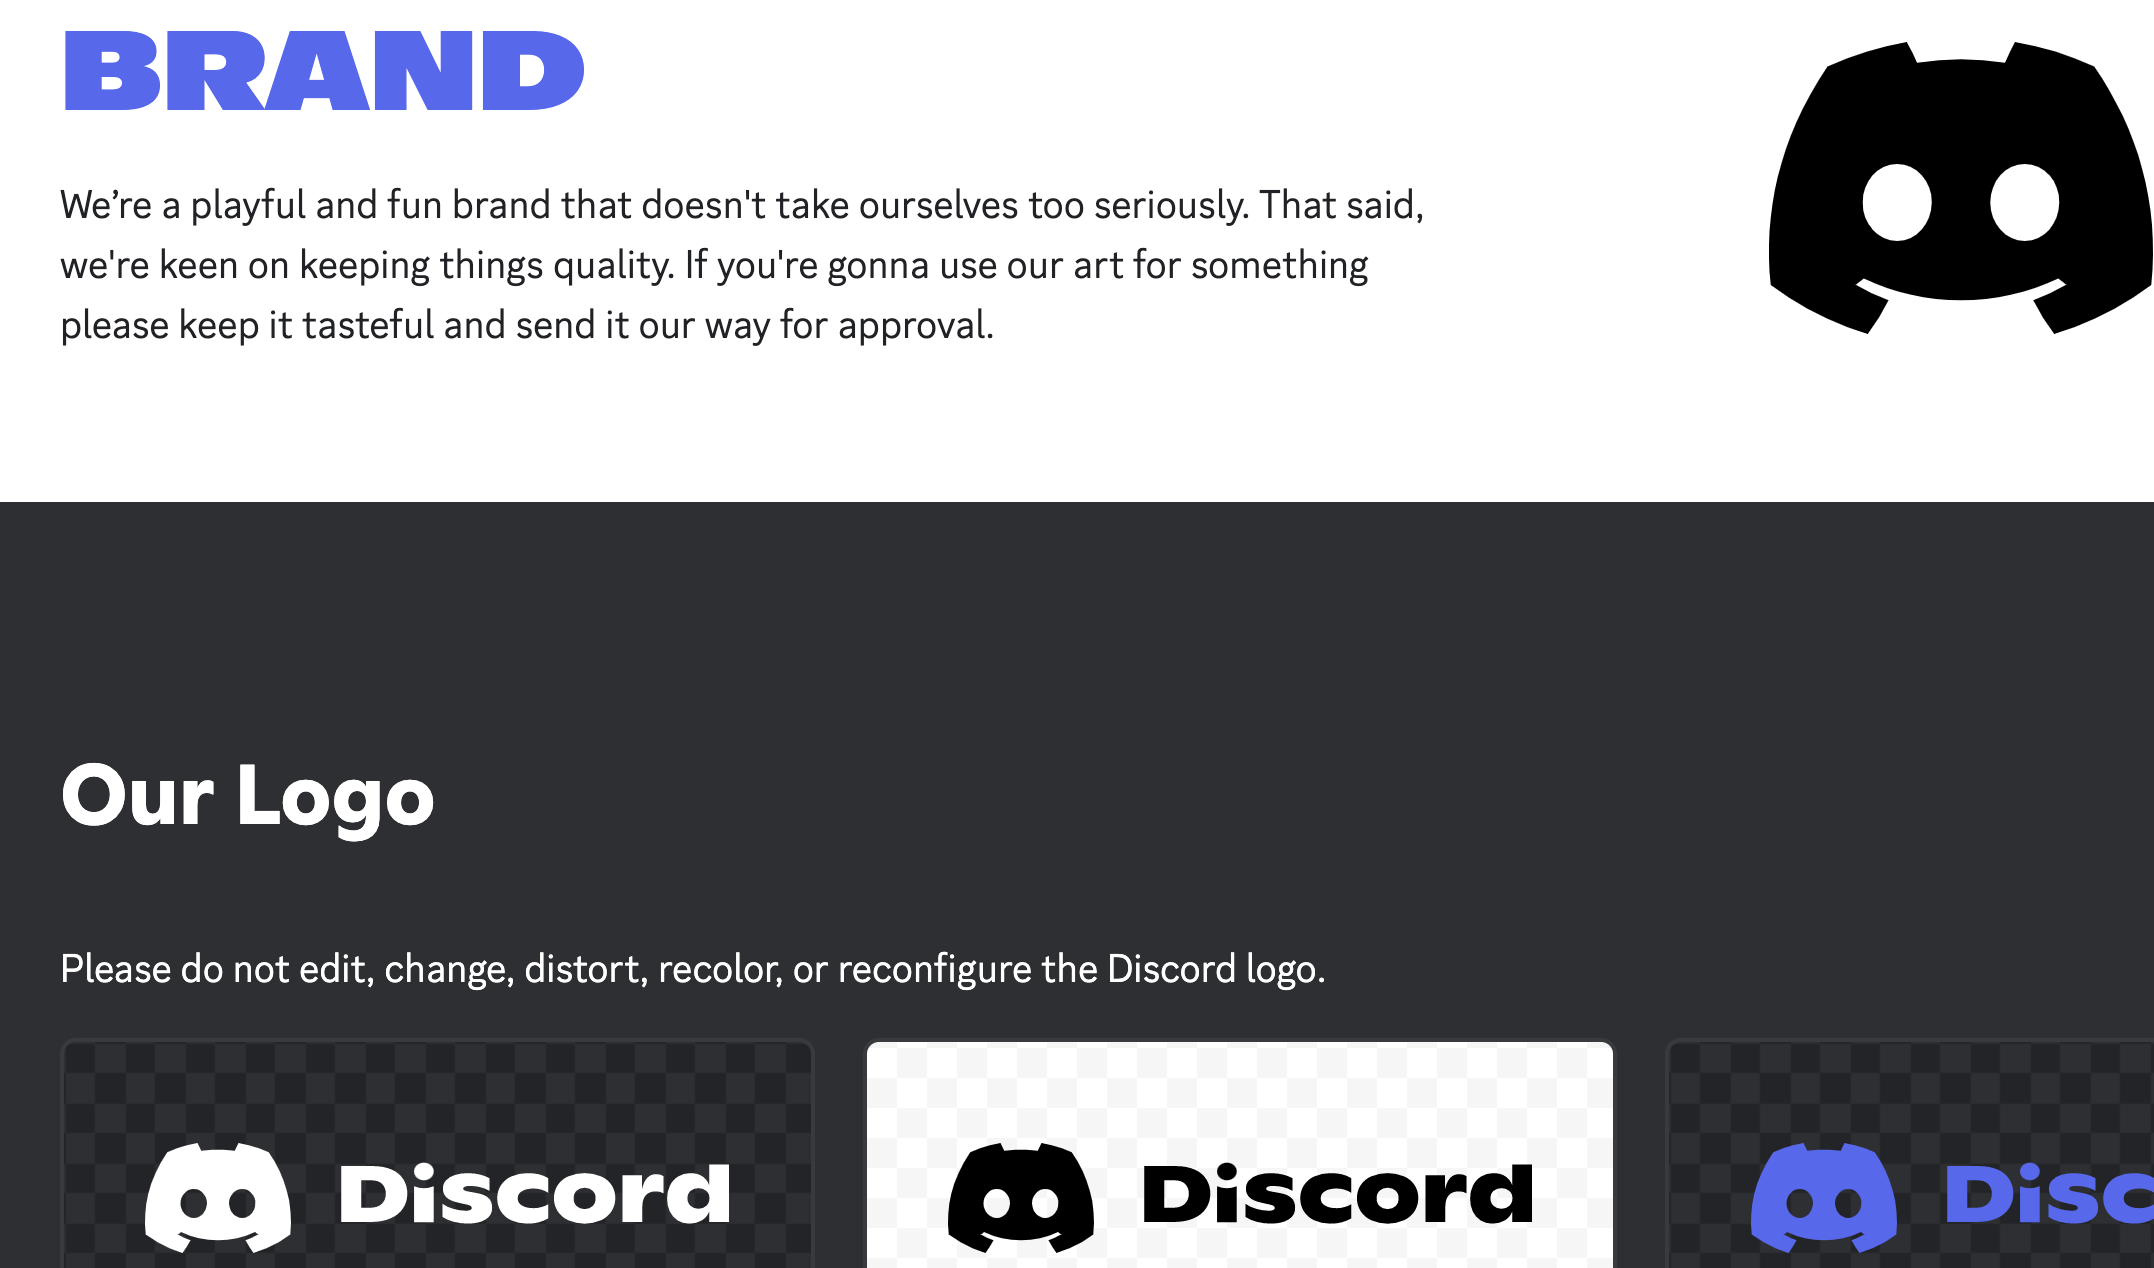 Discord's Branding Guidelines